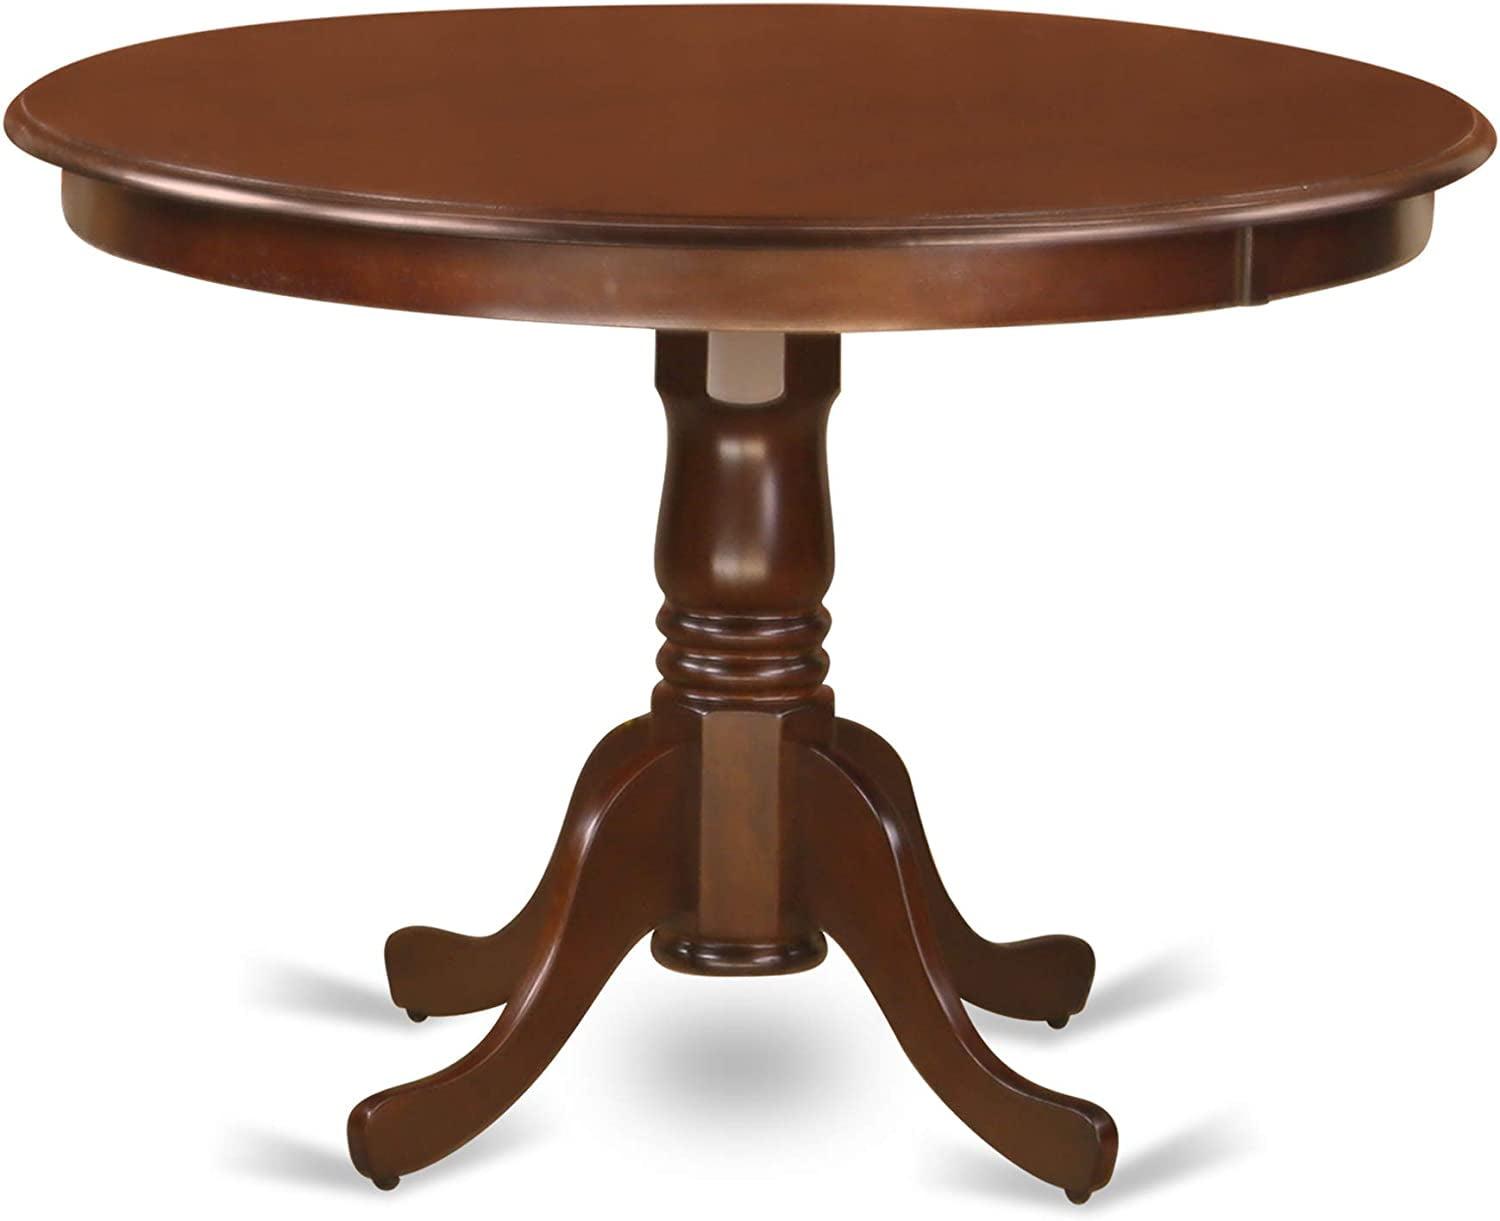 Elegant Mahogany Wood Round Dining Table with Pedestal Base, 42" Diameter